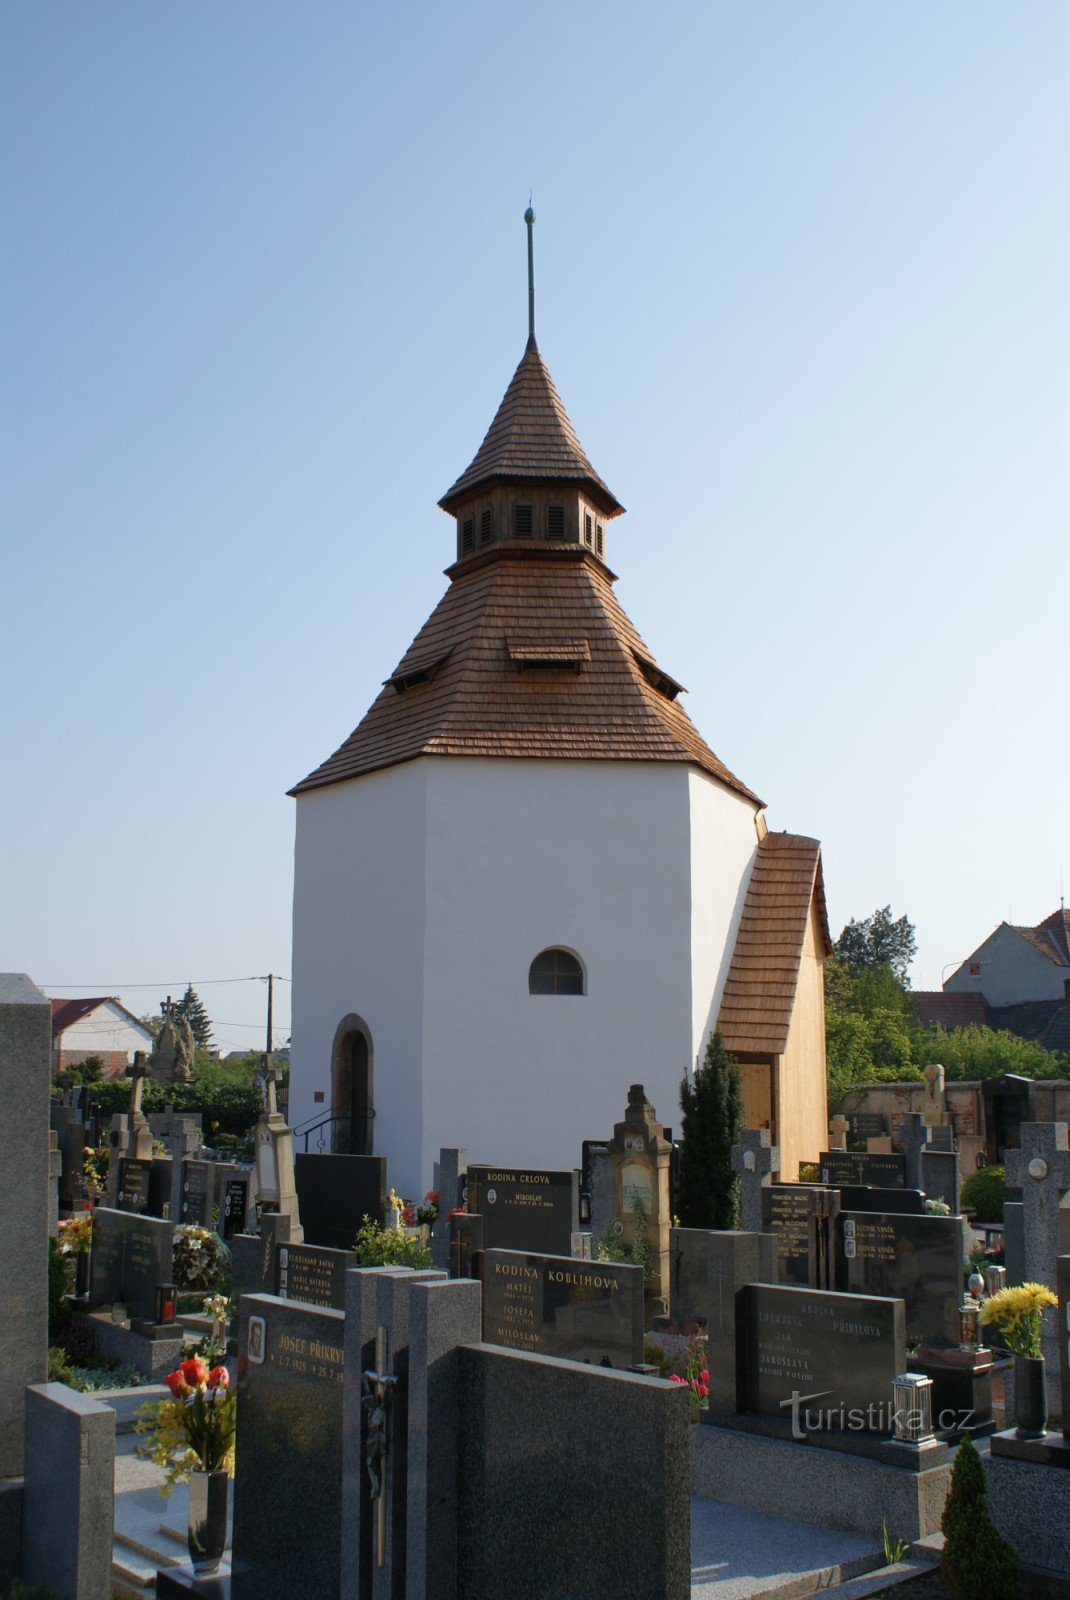 Staré Město koło Uh. Hradiště – teren cmentarny z kościołem św. Archanioł Michał